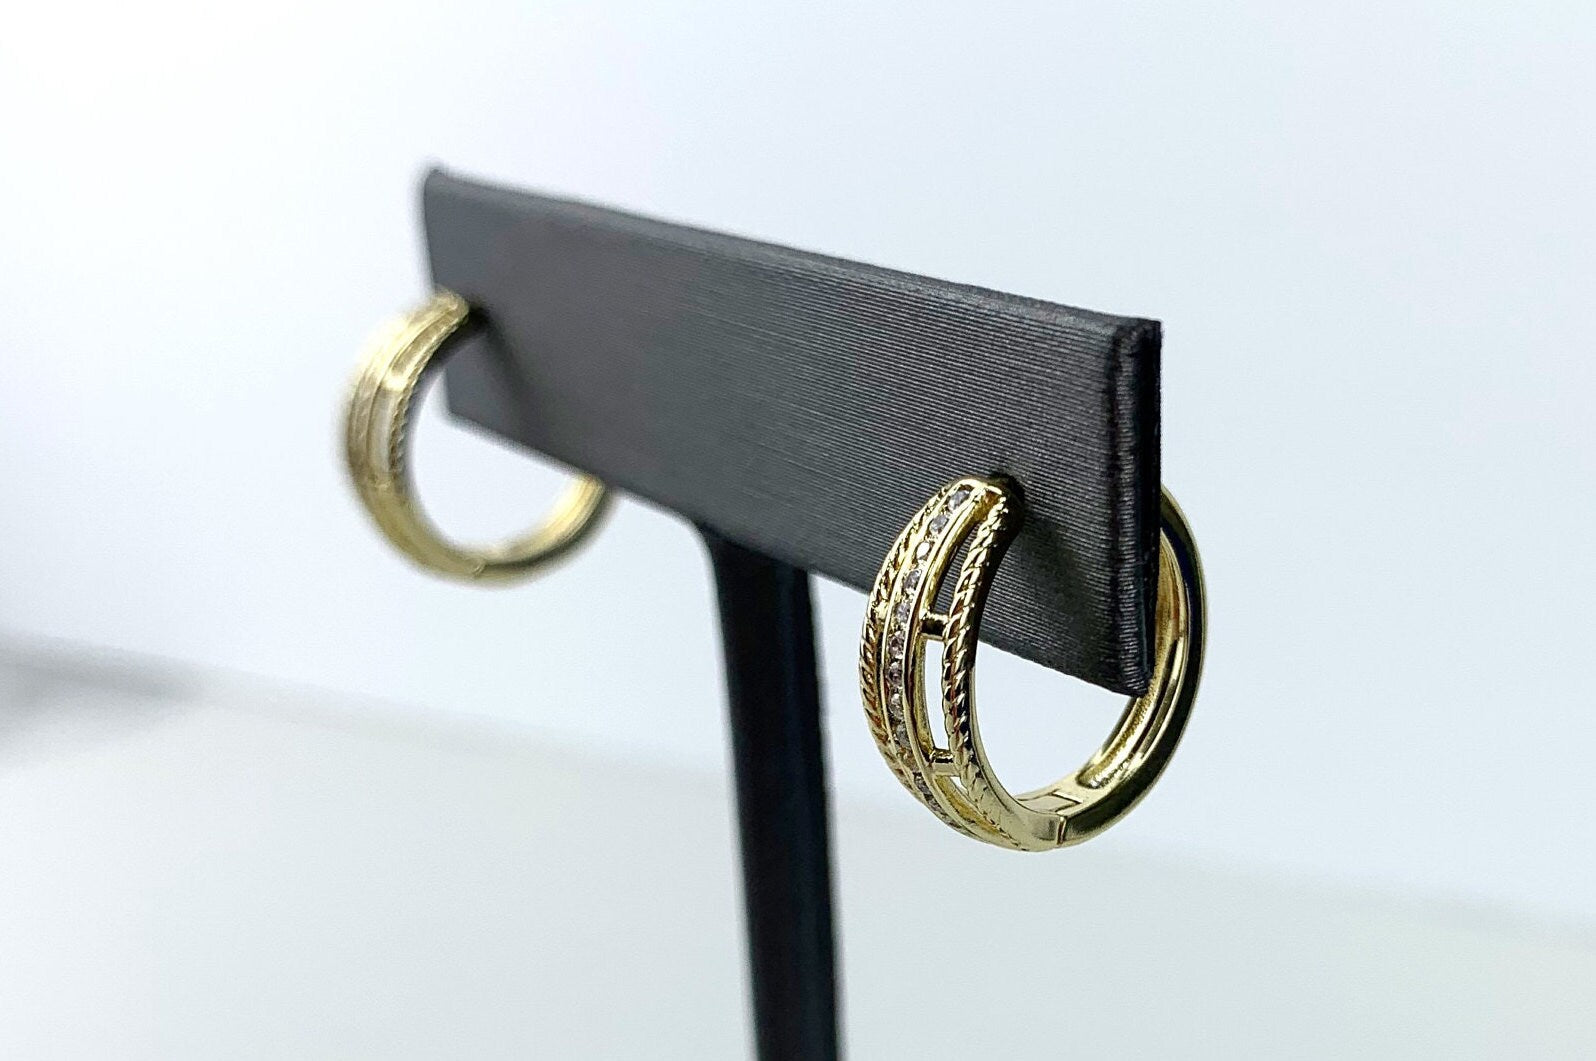 18k Gold Filled 16mm Row Huggie Earrings Cubic Zirconia Classic Earrings, Wholesale Jewelry Making Supplies